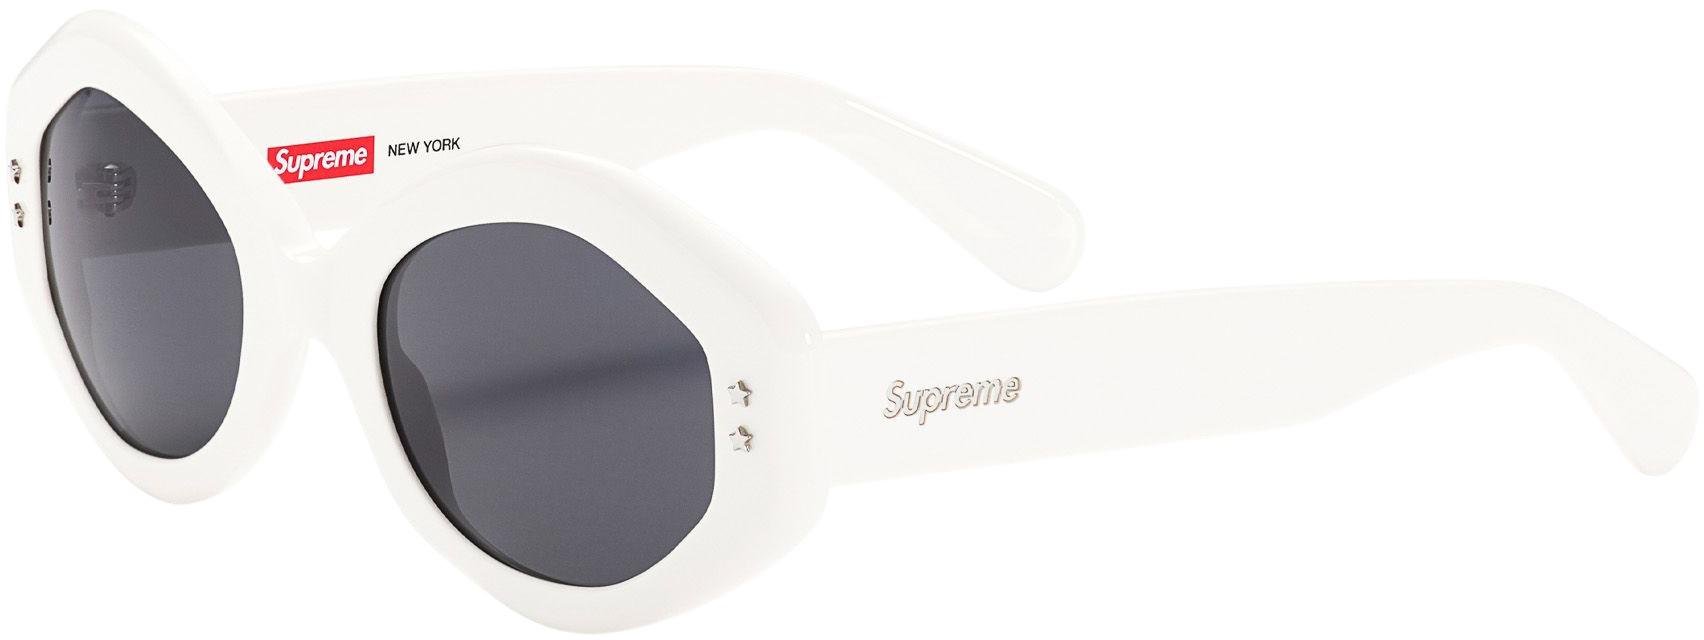 Nomi Sunglasses - spring summer 2023 - Supreme